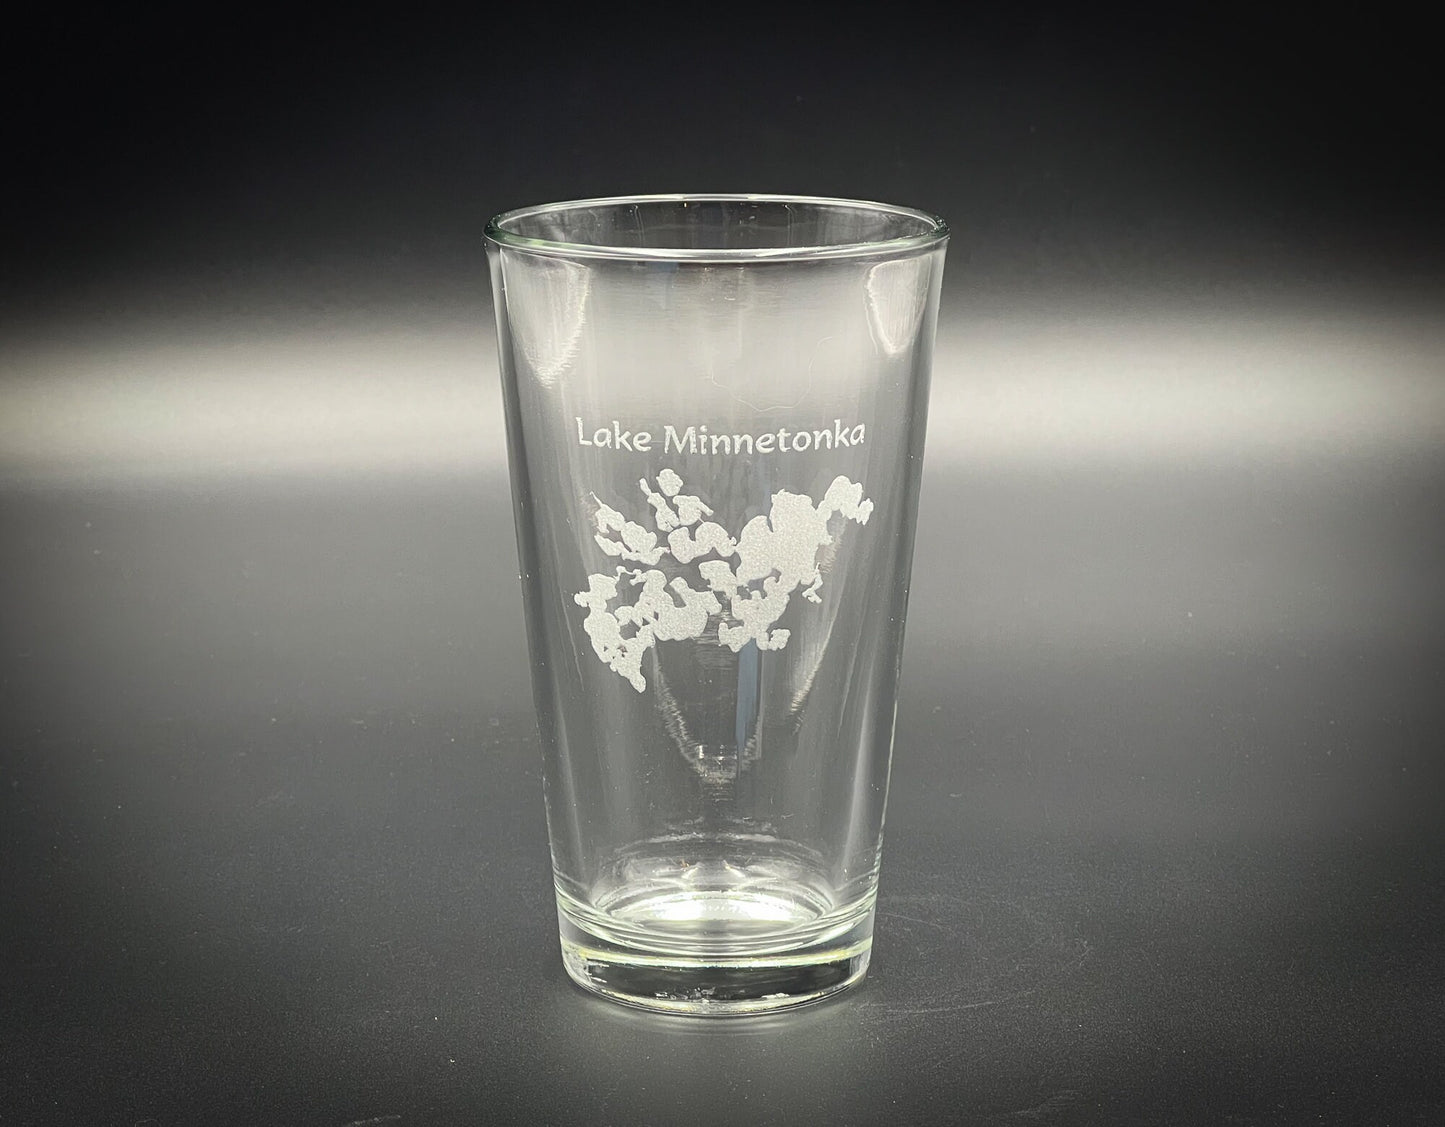 Lake Minnetonka Minnesota - Laser engraved pint glass - dishwasher safe!